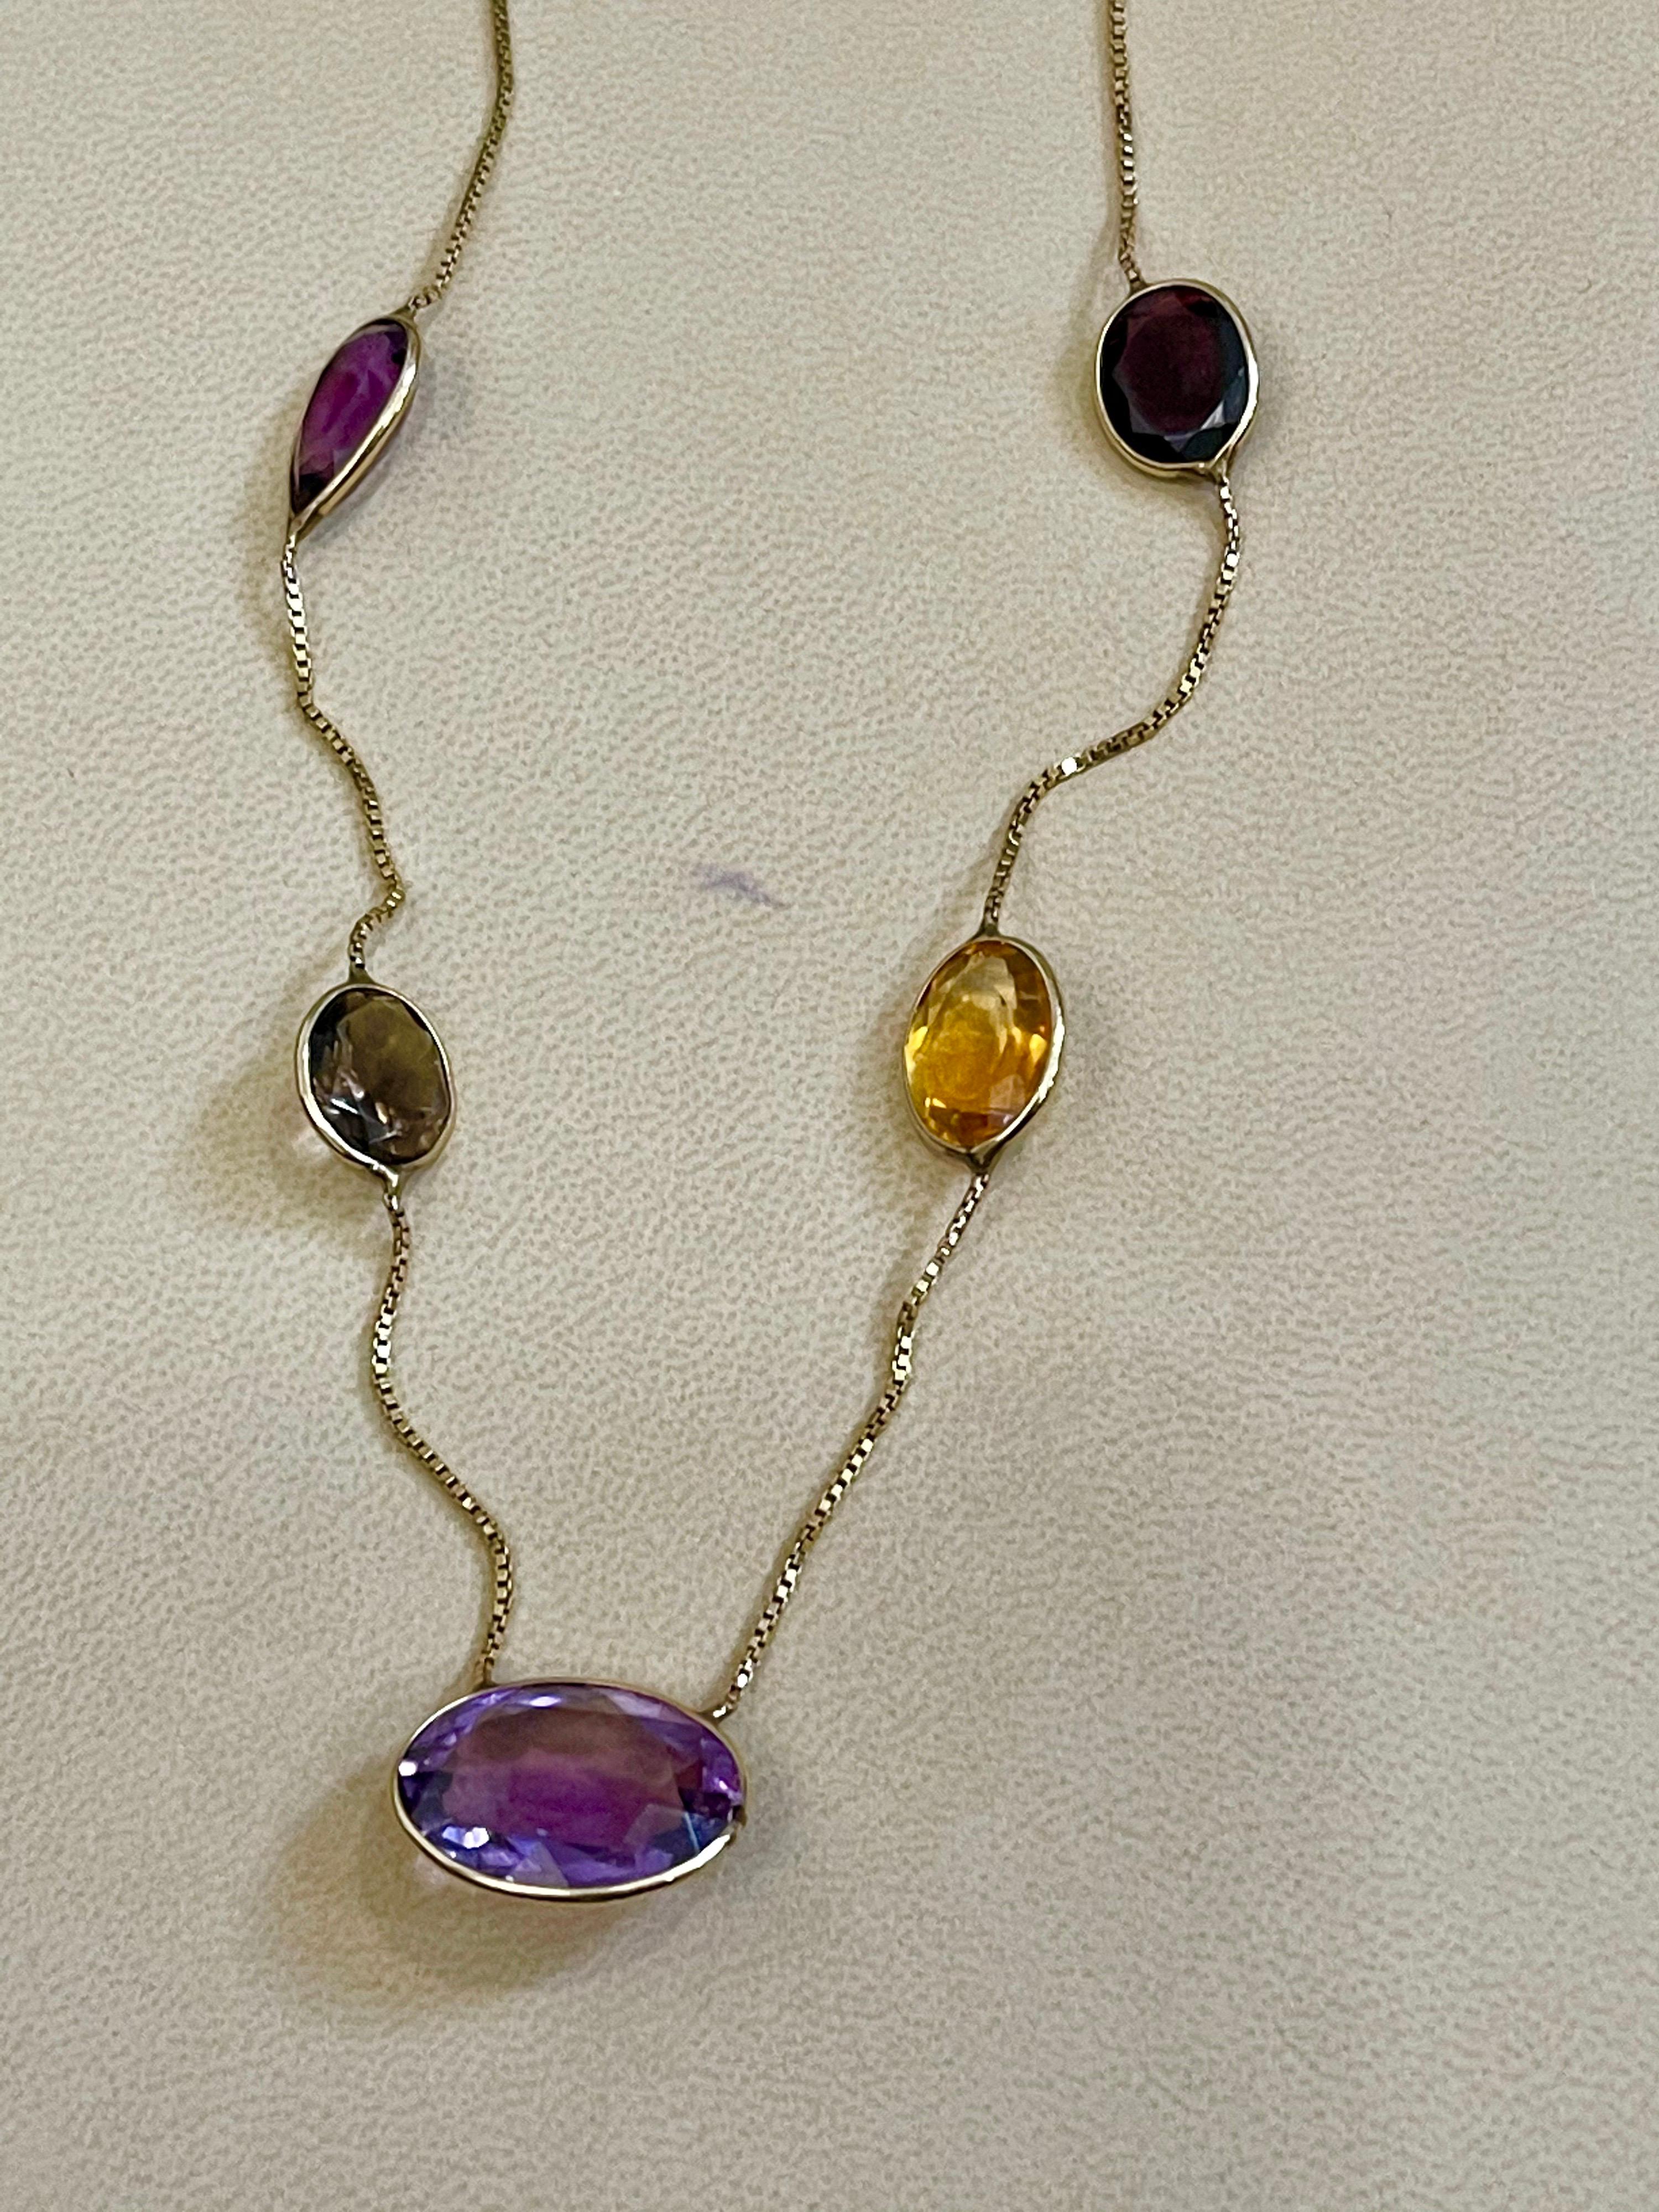 Women's 20 Carat Amethyst, Citrine and Smoky Quartz 5-Piece Chain Necklace 14 Karat Gold For Sale